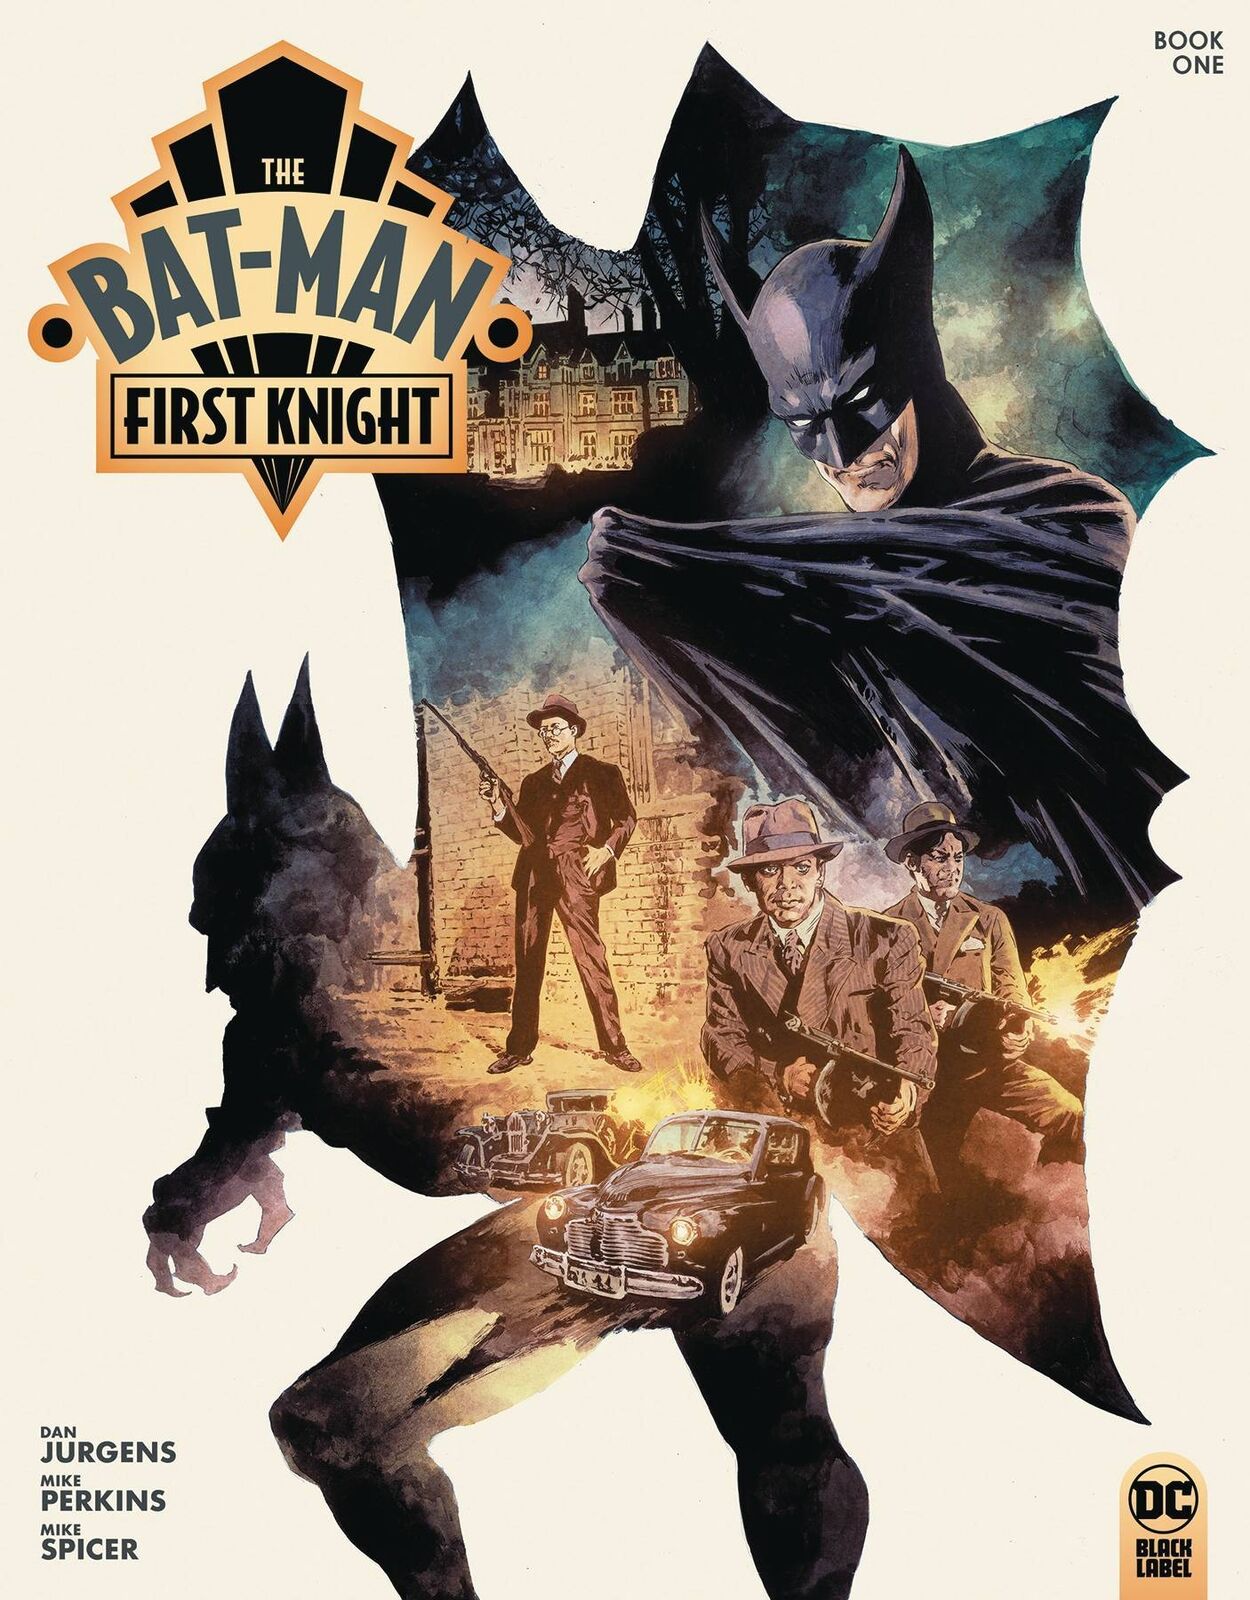 THE BAT-MAN FIRST KNIGHT #1 (OF 3) CVR A MIKE PERKINS (MR) DC COMICS